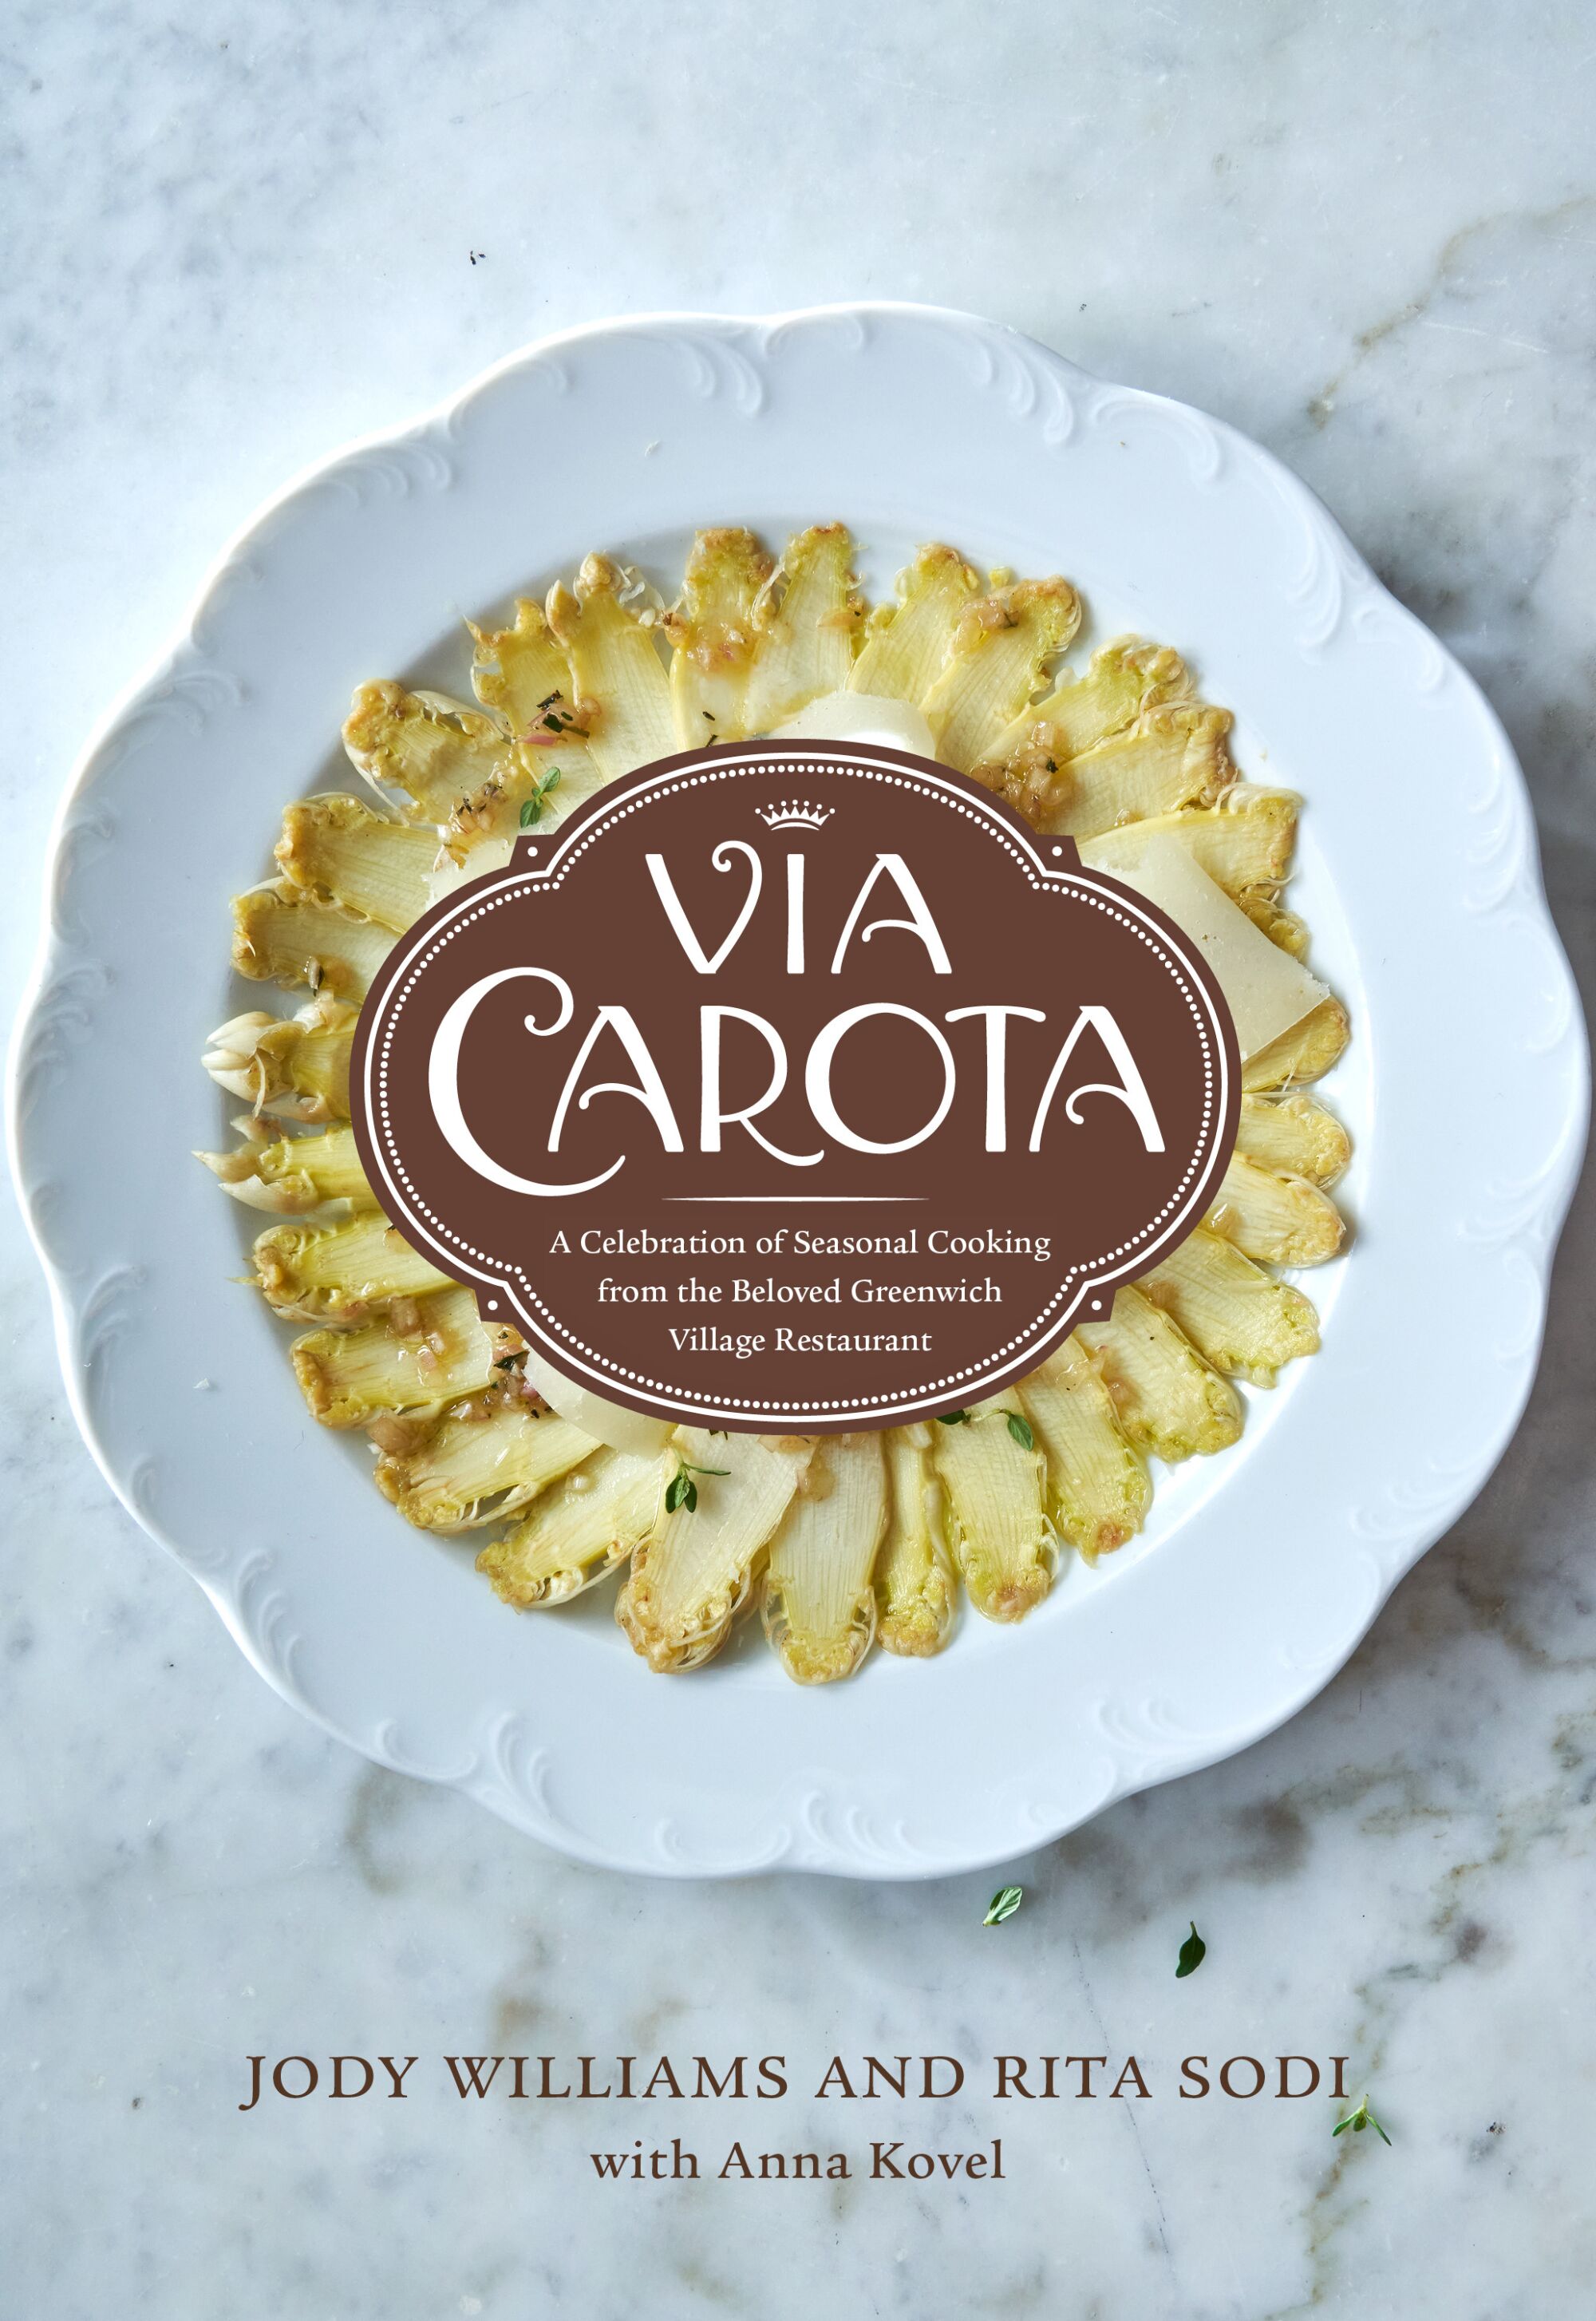 Via Carota: A Celebration of Seasonal Cooking from the Beloved Greenwich Village Restaurant by Jody Williams and Rita Sodi